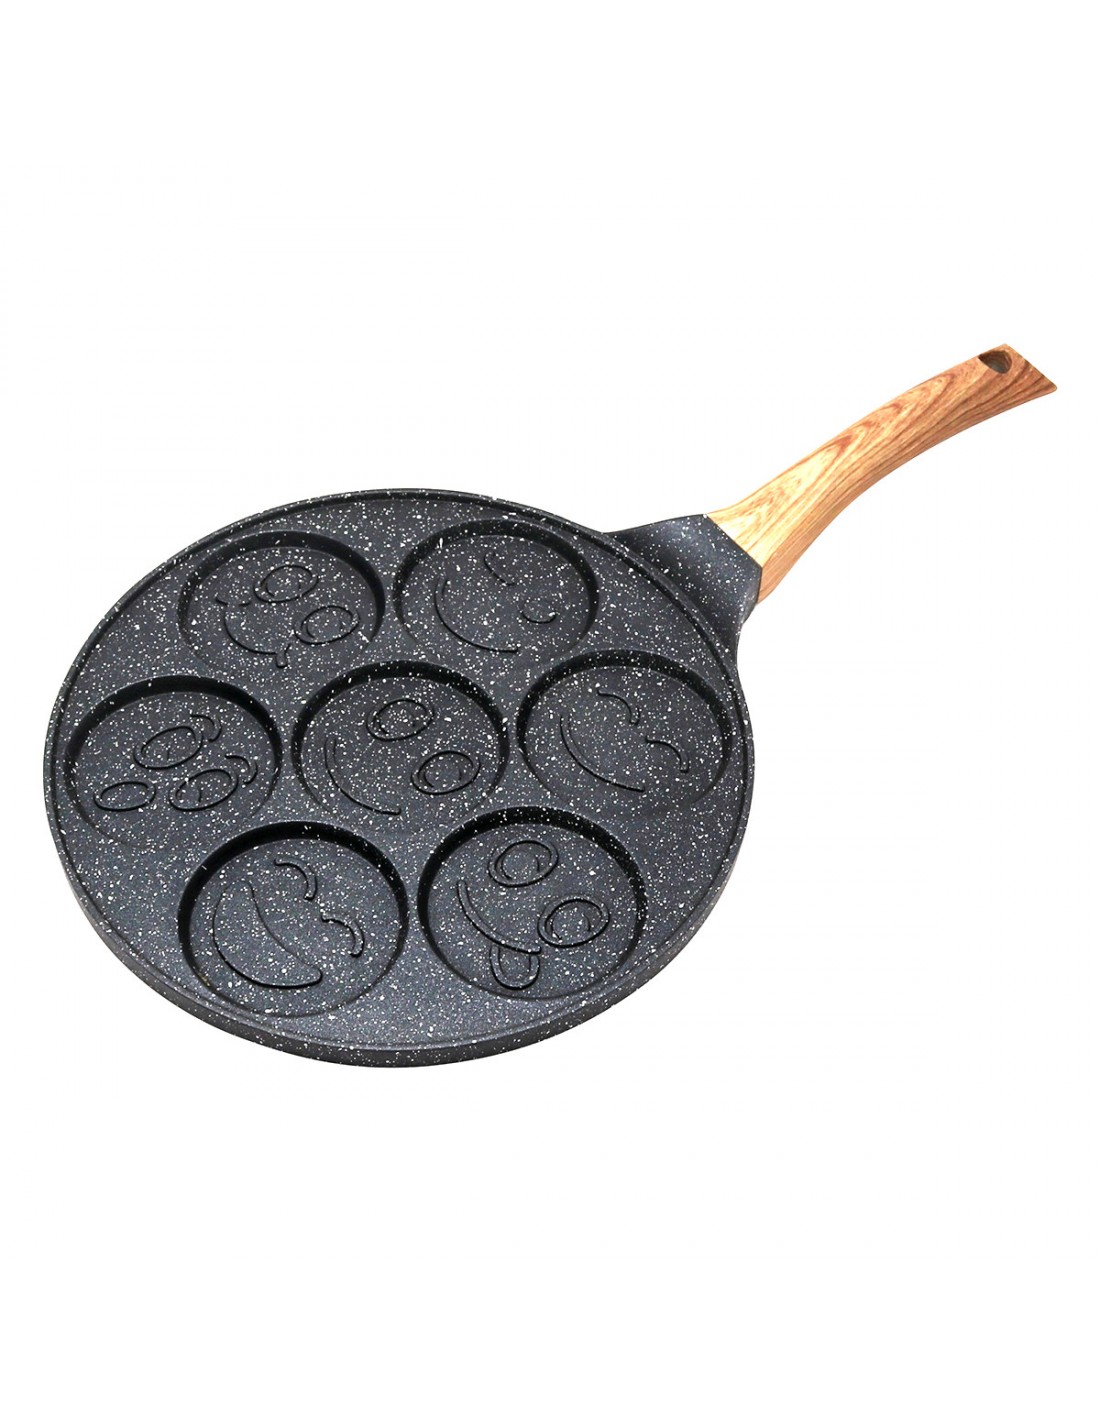 https://kinghoff.com/4354-thickbox_default/mini-waffle-pancake-pan.jpg